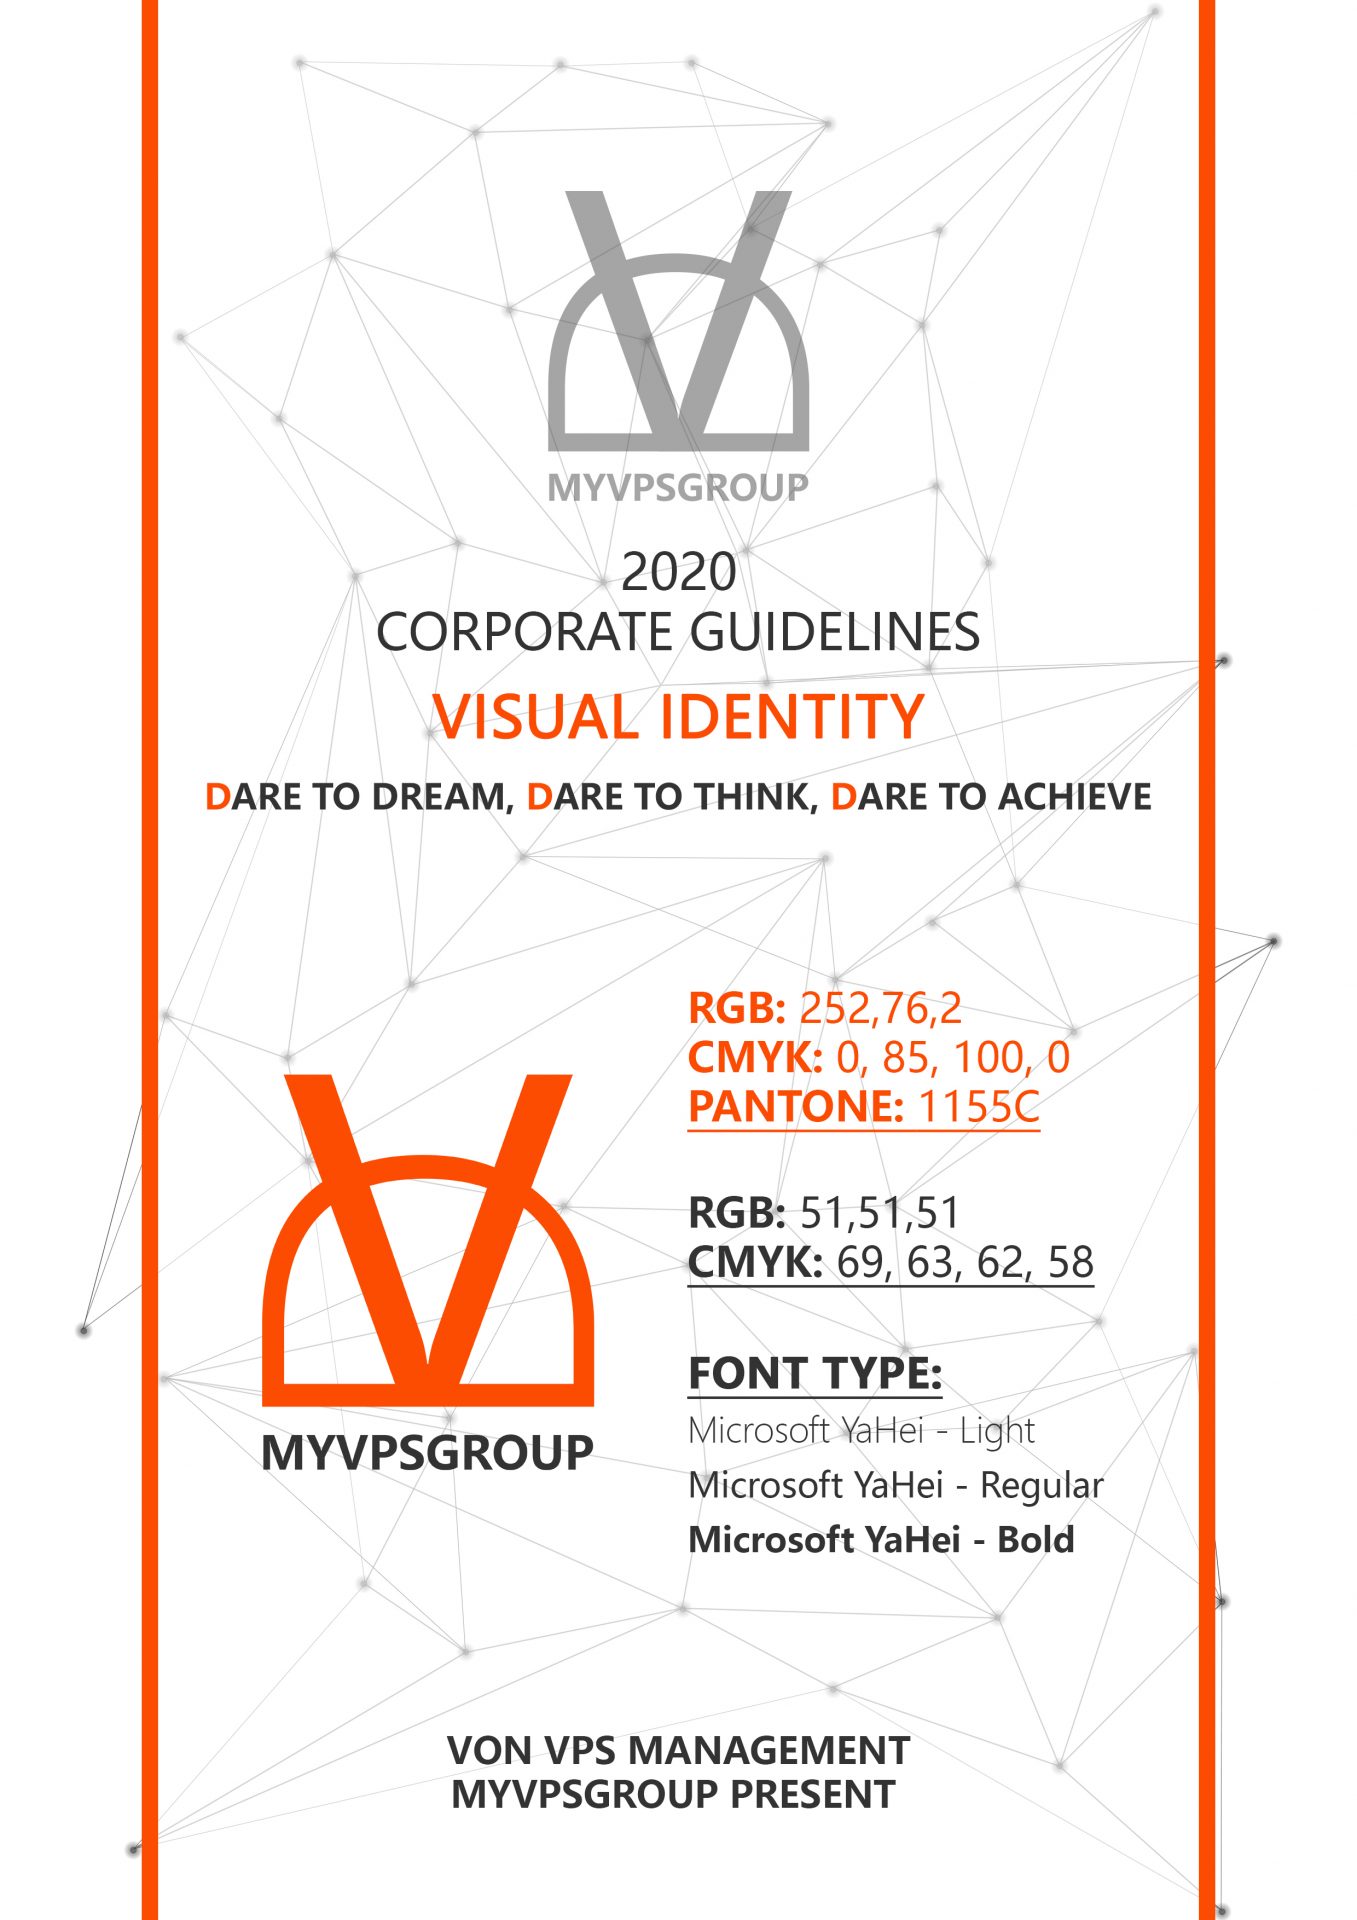 C5-MyVpsGroup-Digital-Marketing-Malaysia-Ci-Color-Introduction